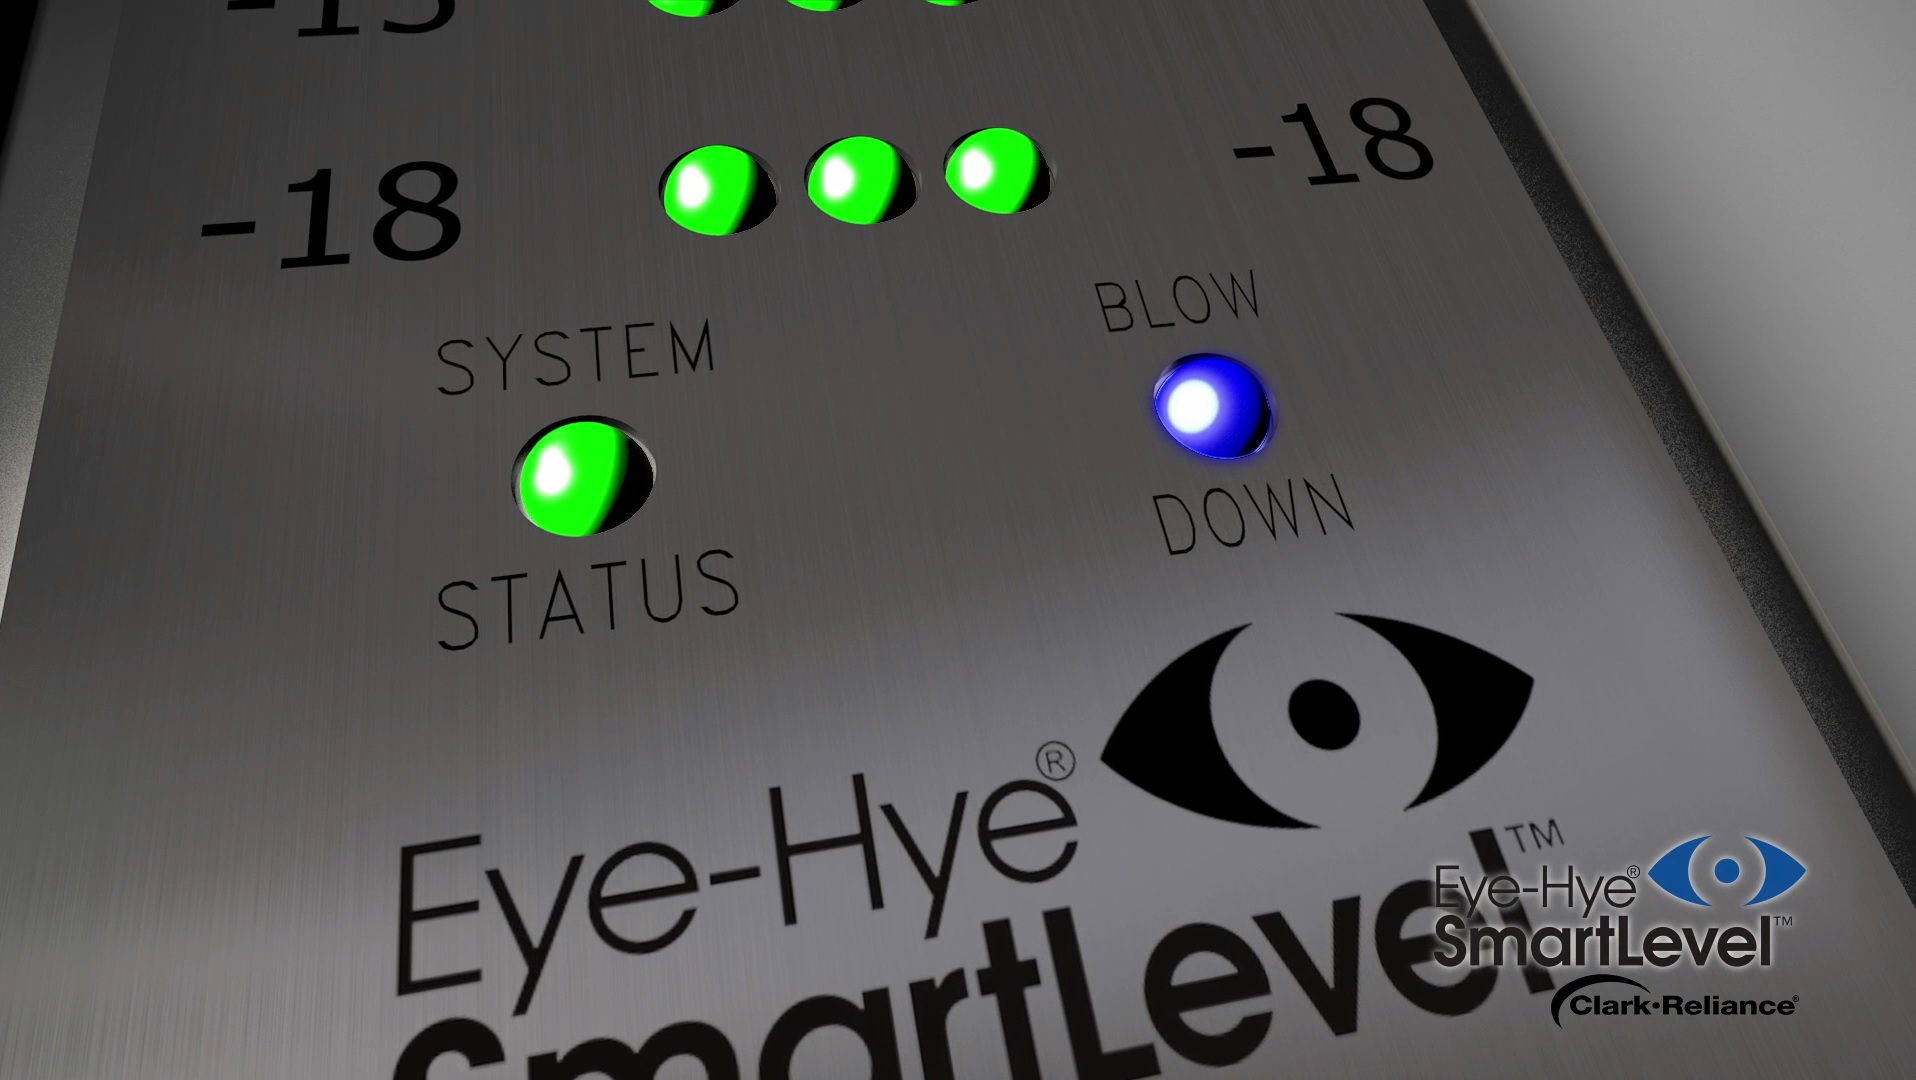 stoomketel - eye-hye smartlevel - blowdown LED